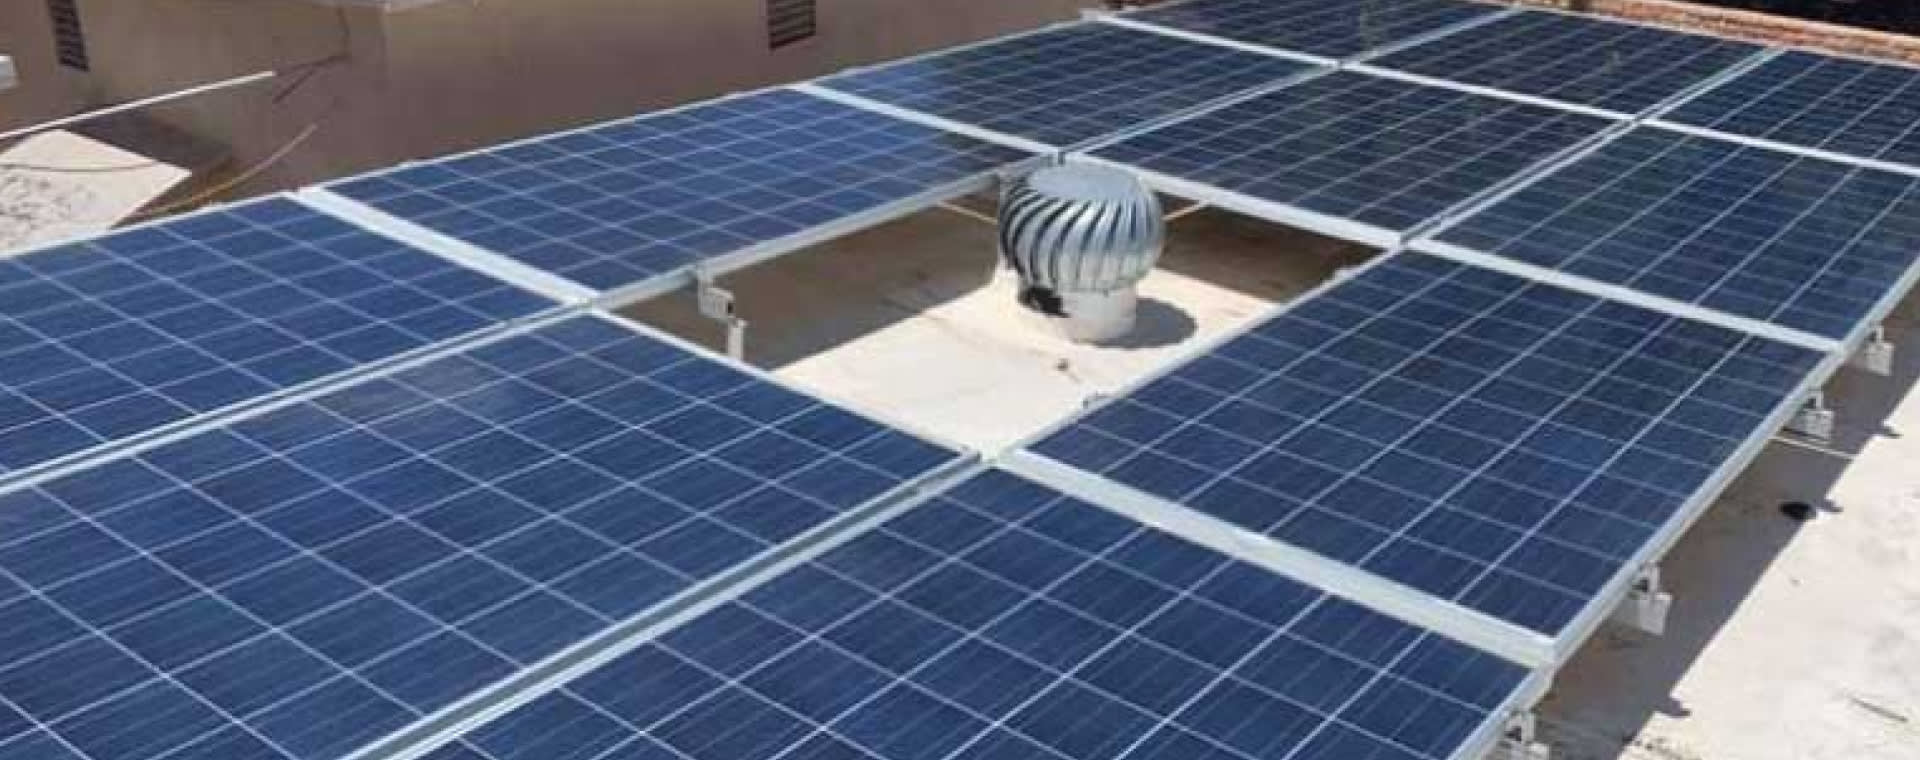 Solar power installation & repairs background